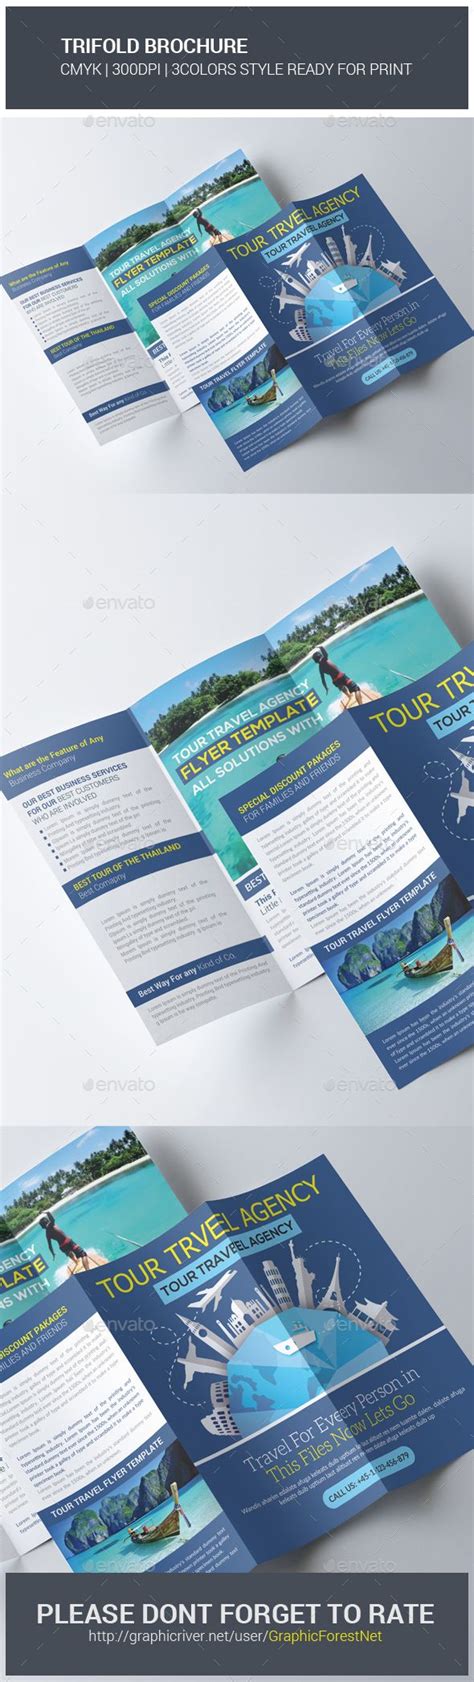 Thailand Tour Travel Tri Fold Brochure Template Psd Trifold Brochure